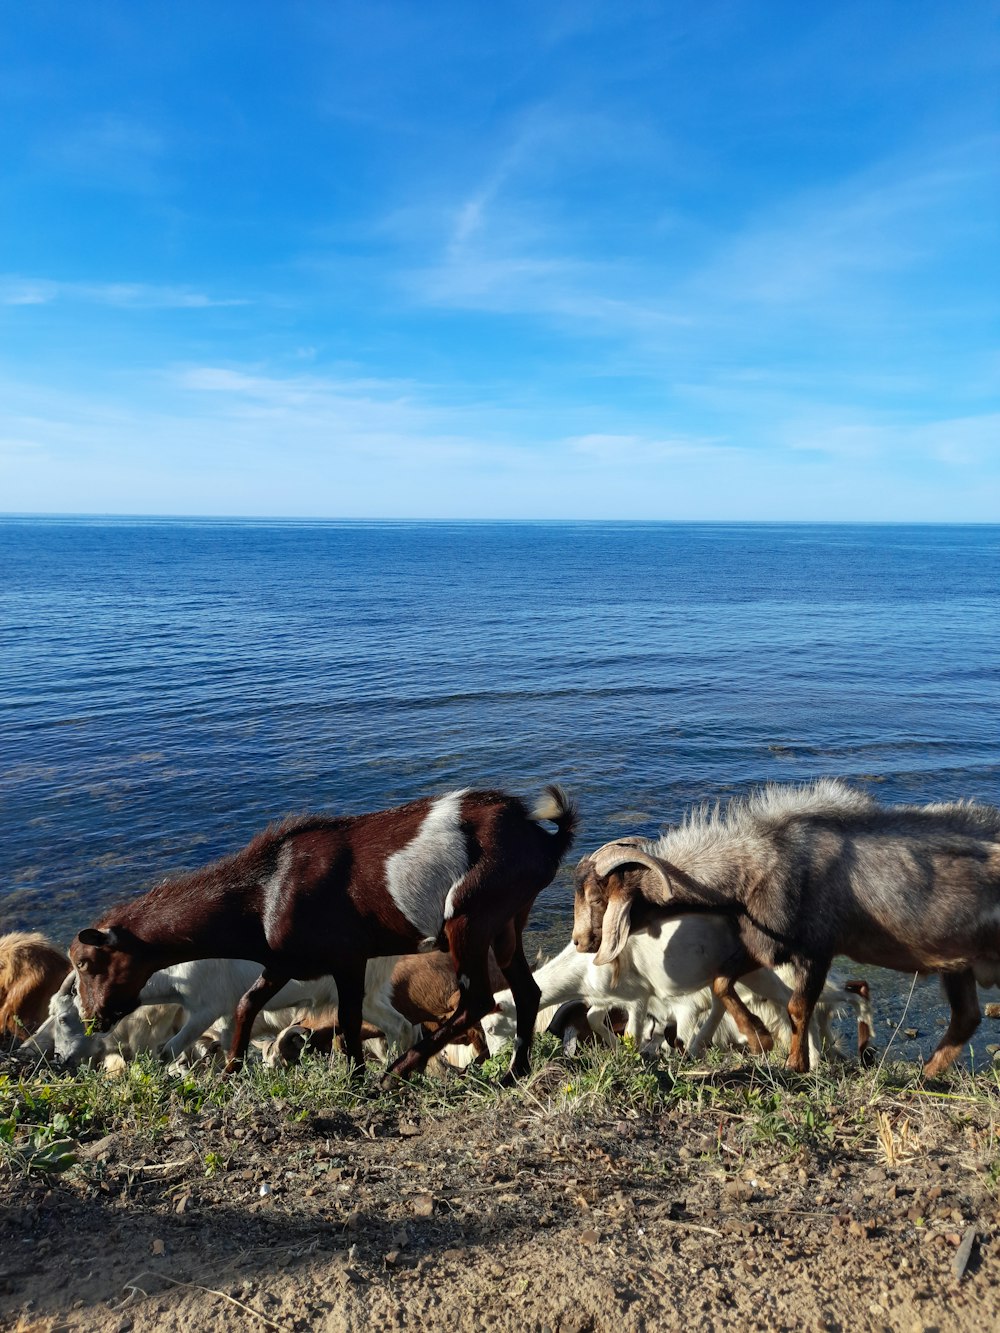 a herd of horses walking along a beach next to the ocean